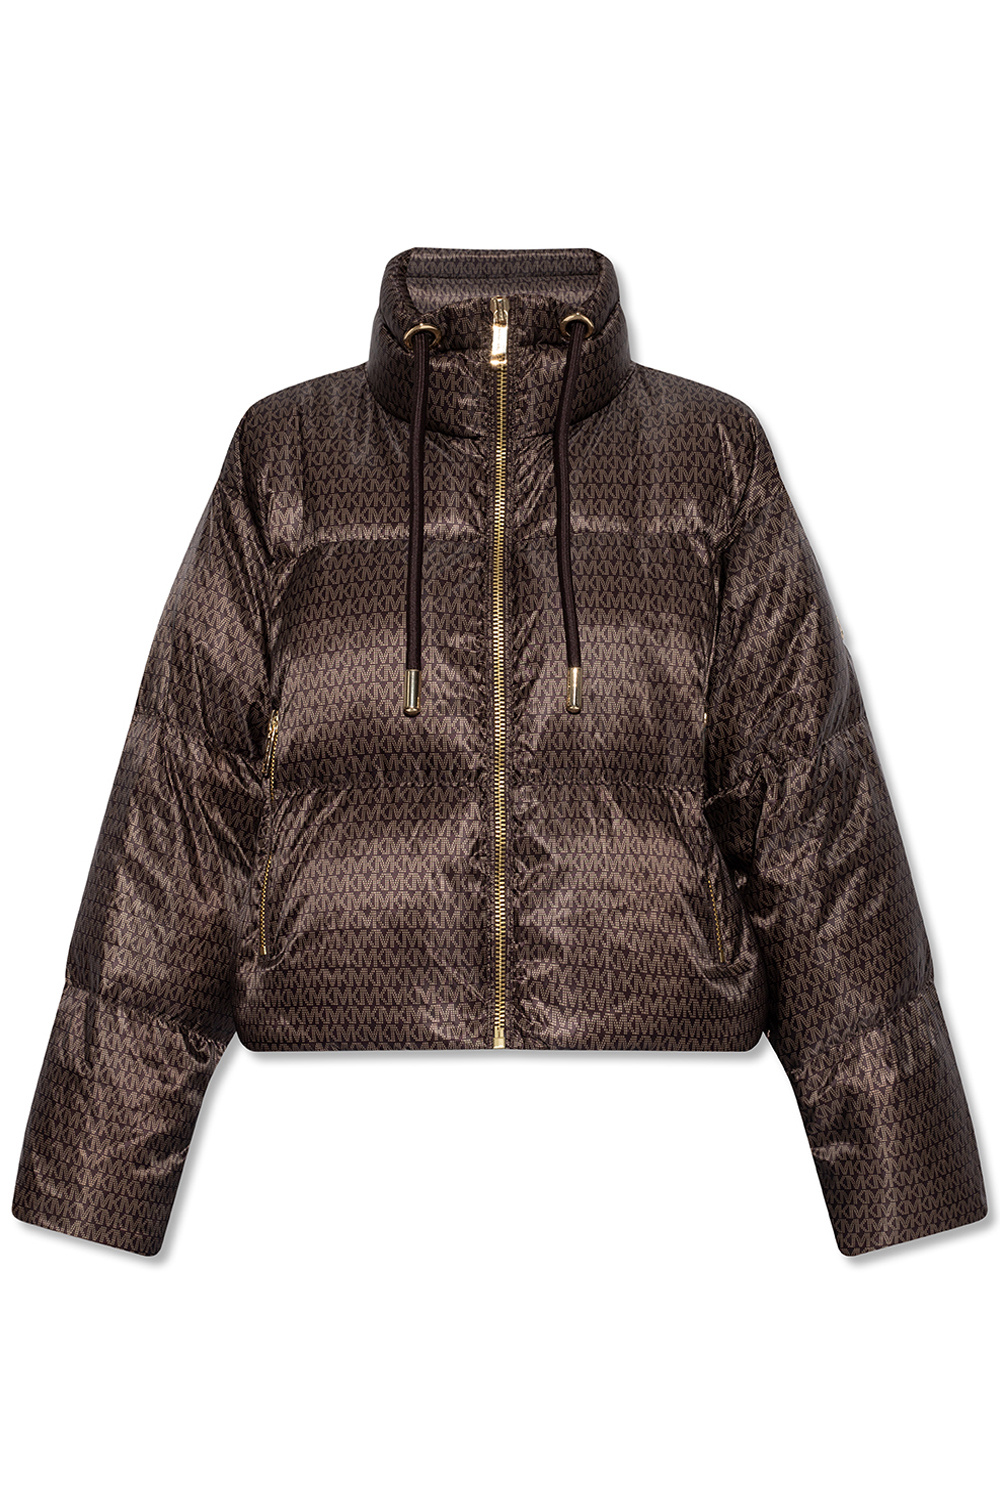 Brown Jacket with monogram Gucci - Vitkac GB